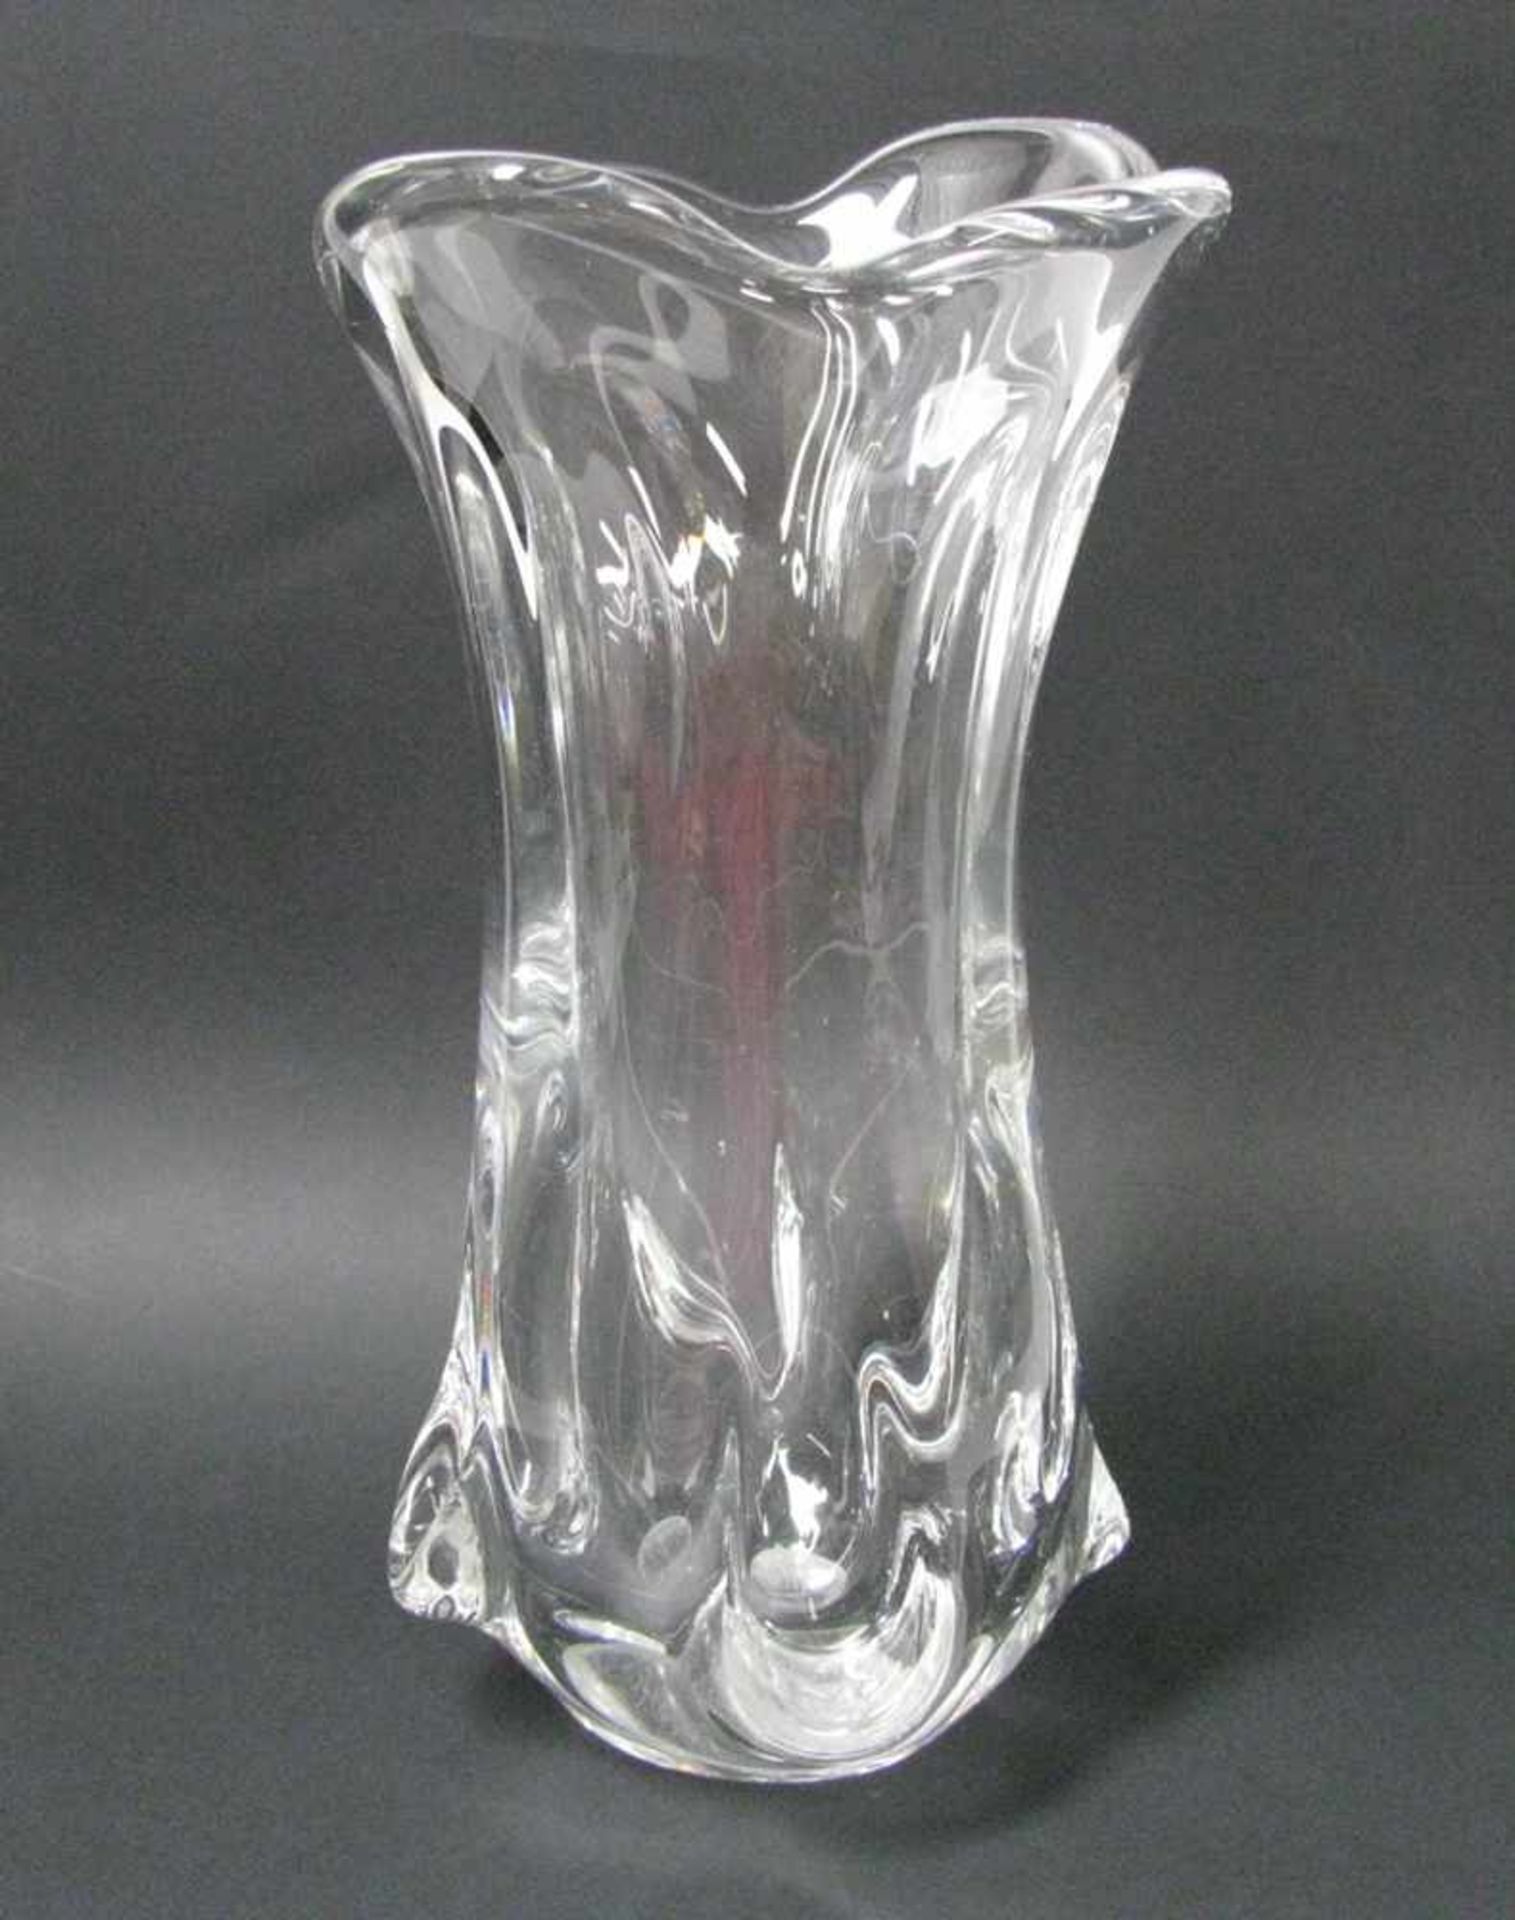 Vase, 1950/60er Jahre, farbloses Glas, h 29 cm, d 14 cm.- - -19.00 % buyer's premium on the hammer